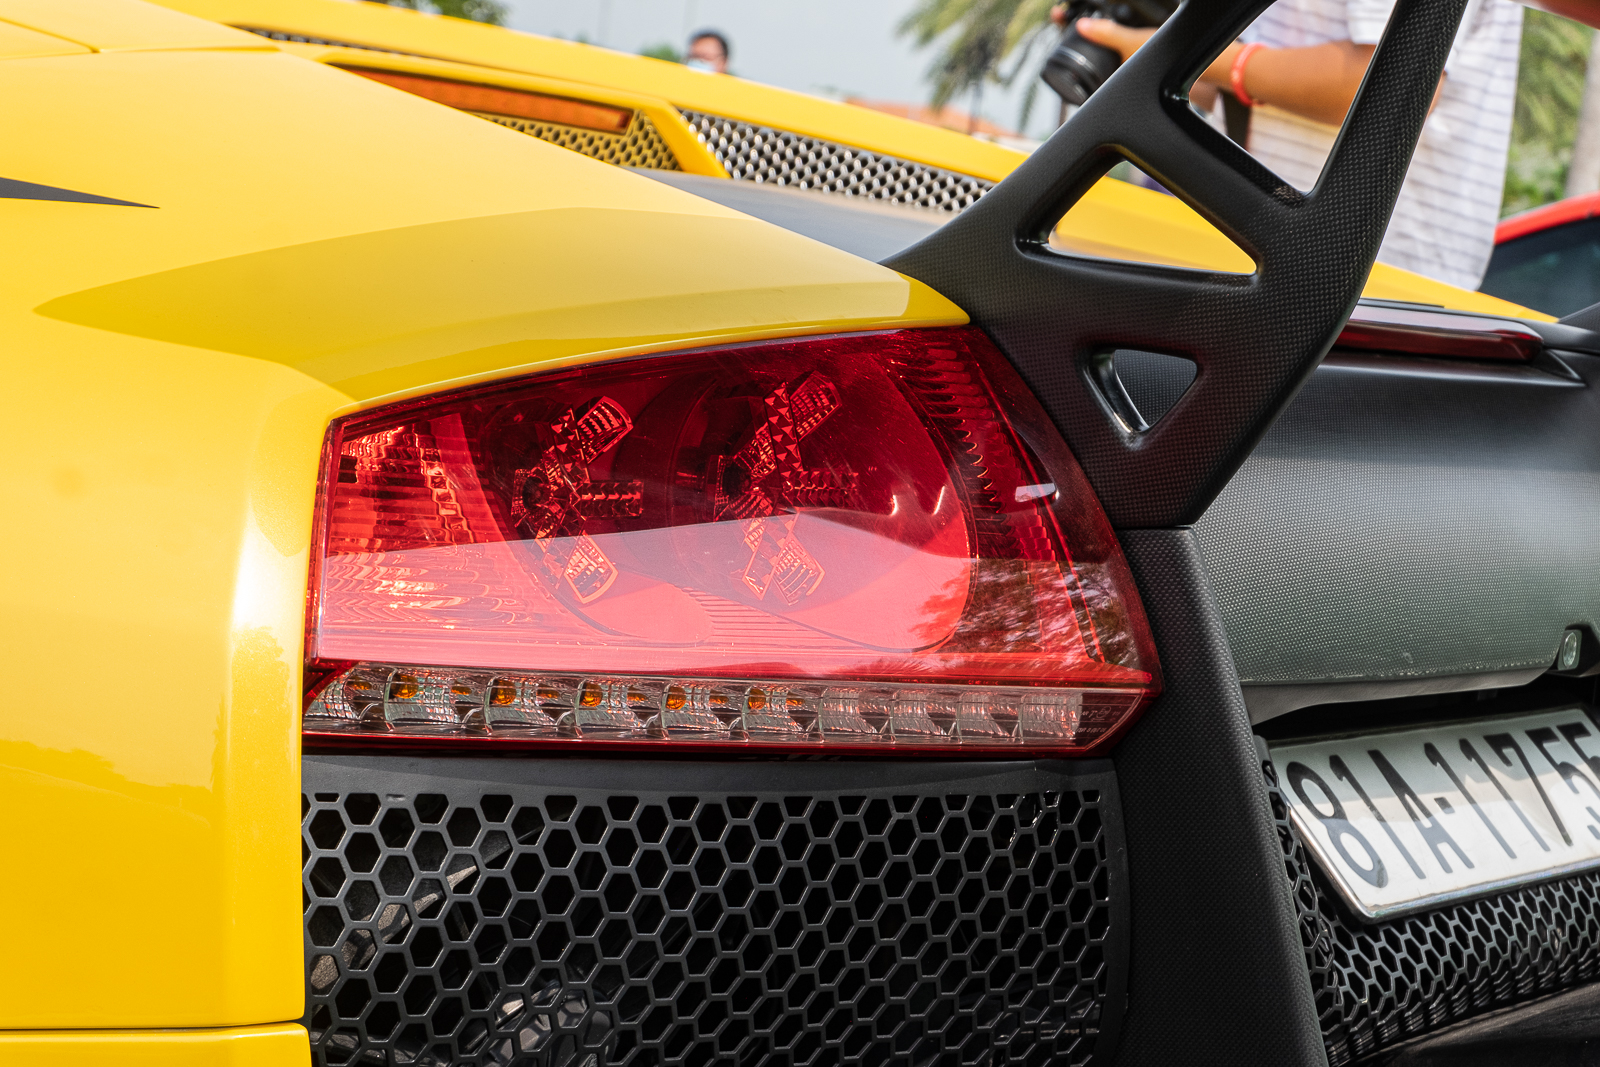 Chi tiết Lamborghini Murcielago Roadster 14 năm tuổi của doanh nhân Gia Lai lamborghini-murcielago-roadster-autodaily-11.JPG